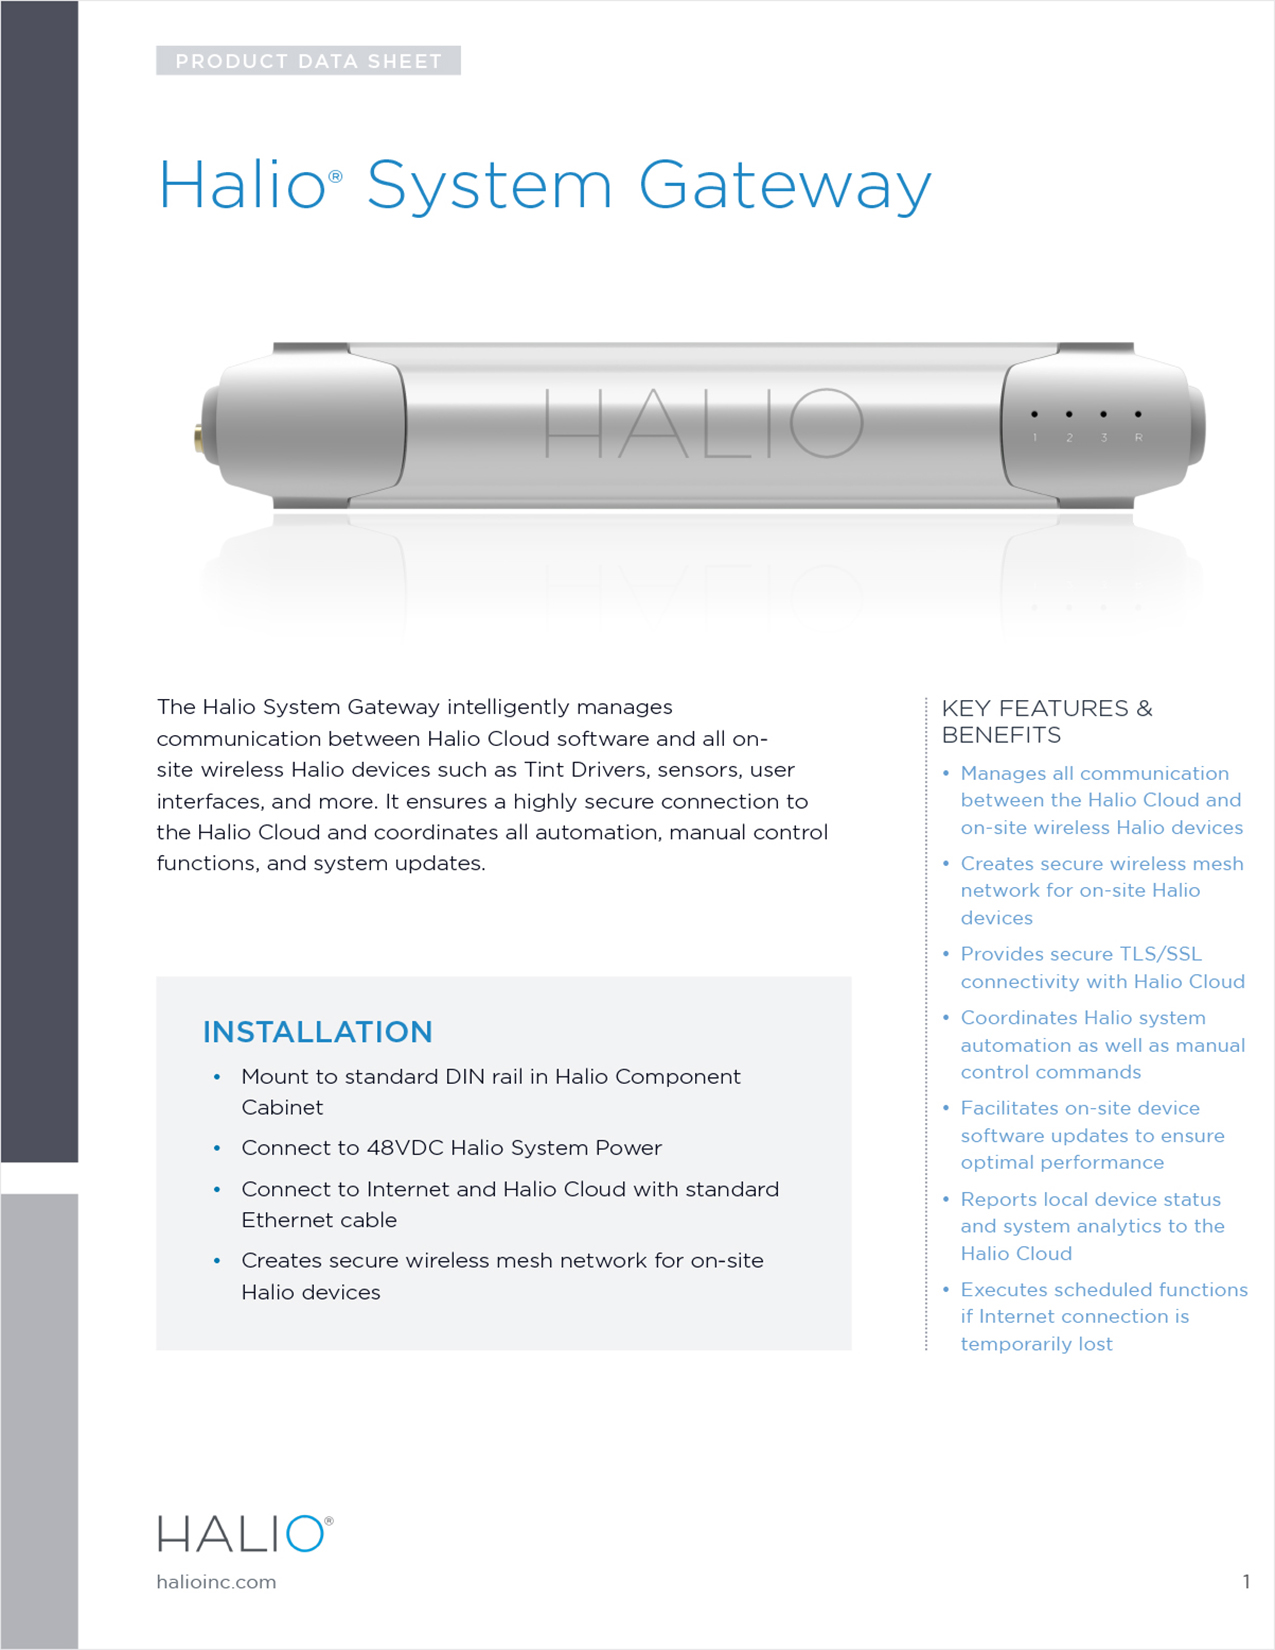 HALIO System Gateway Data Sheet